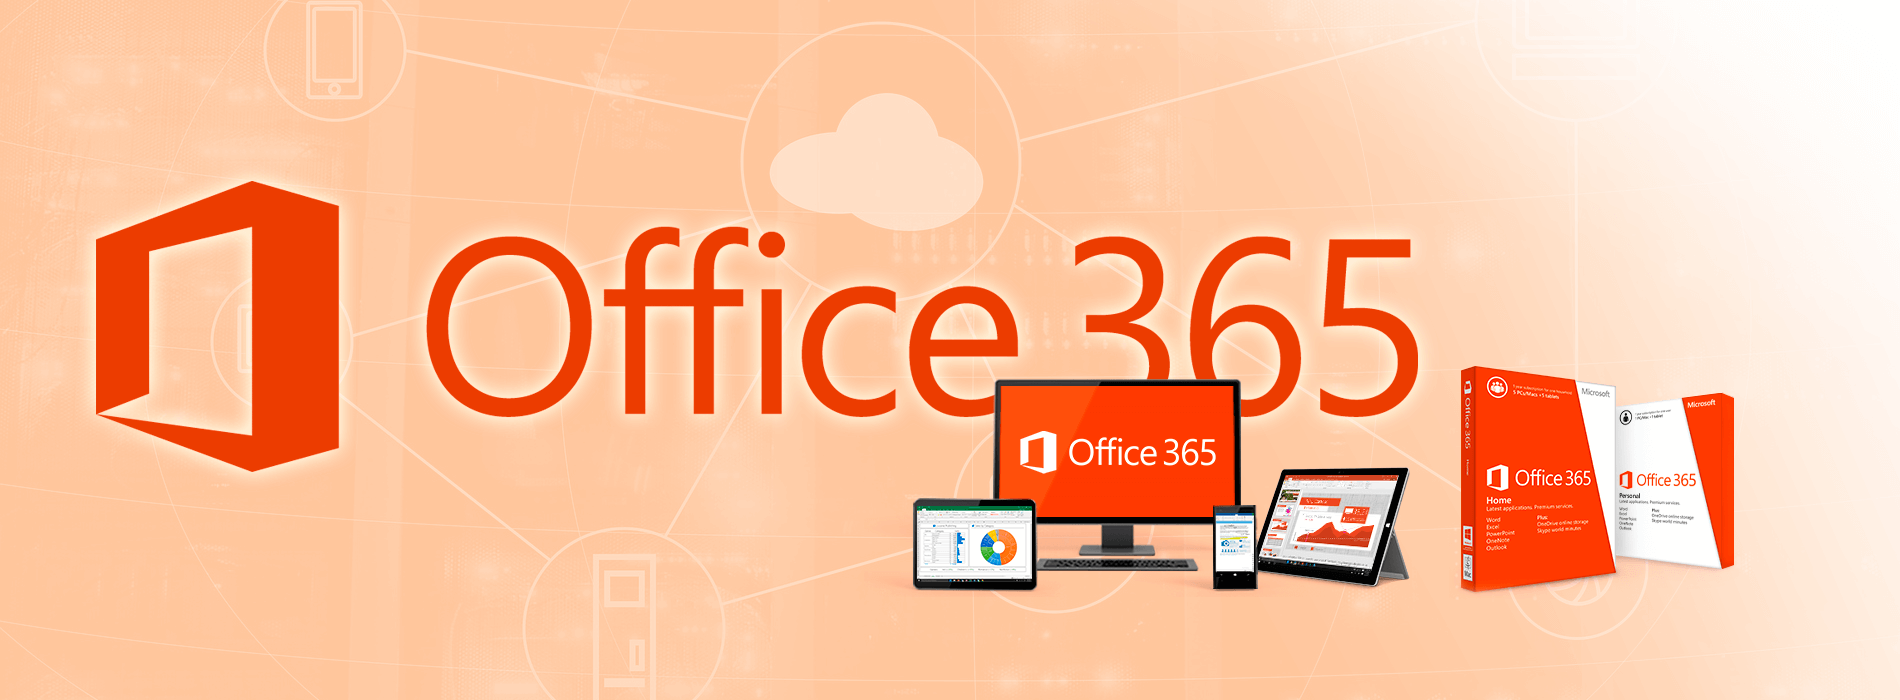 Microsoft Office 365 - Soluciones cloud computing de ofimática - ENETIC